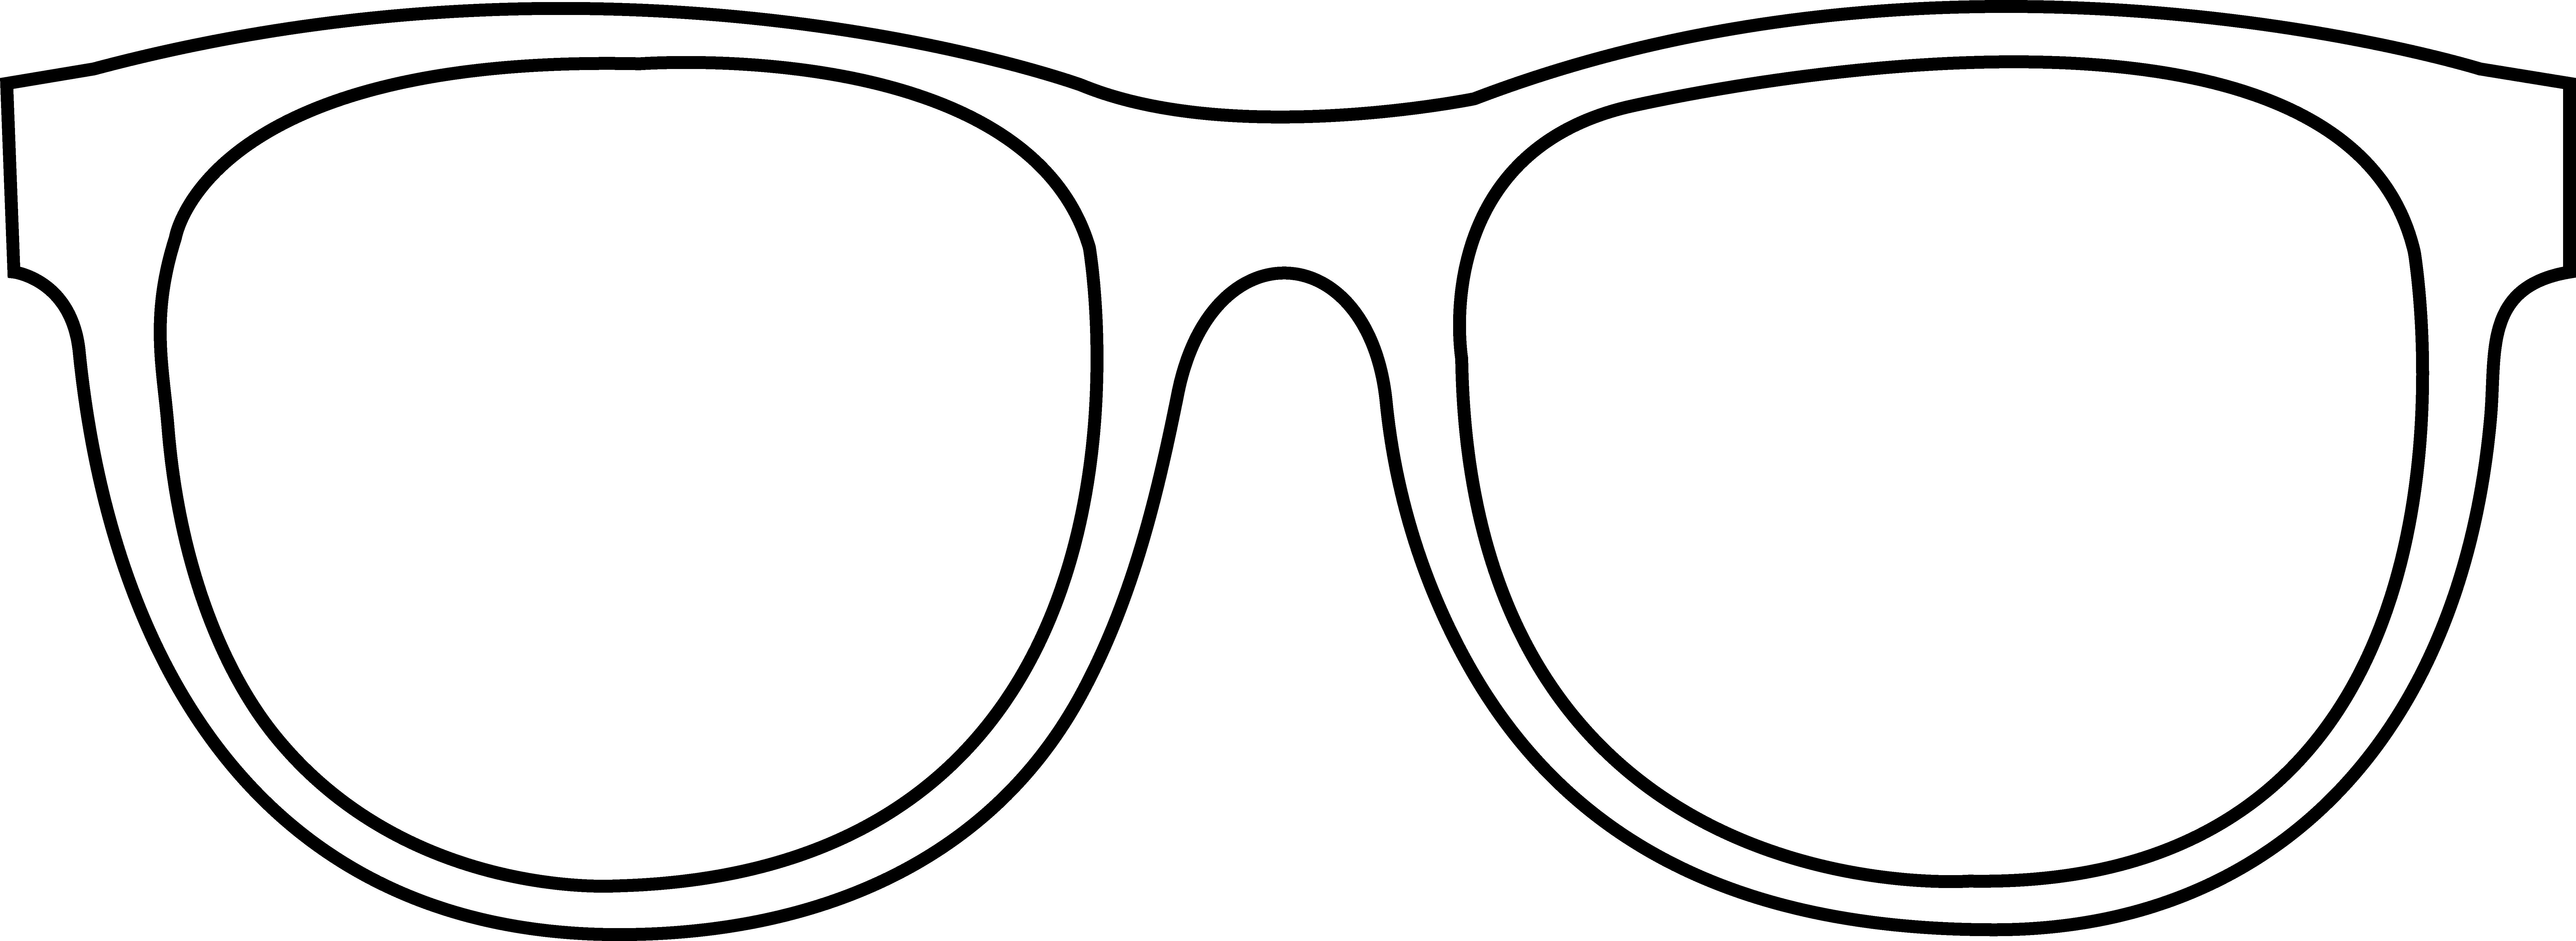 Glasses clipart black and white